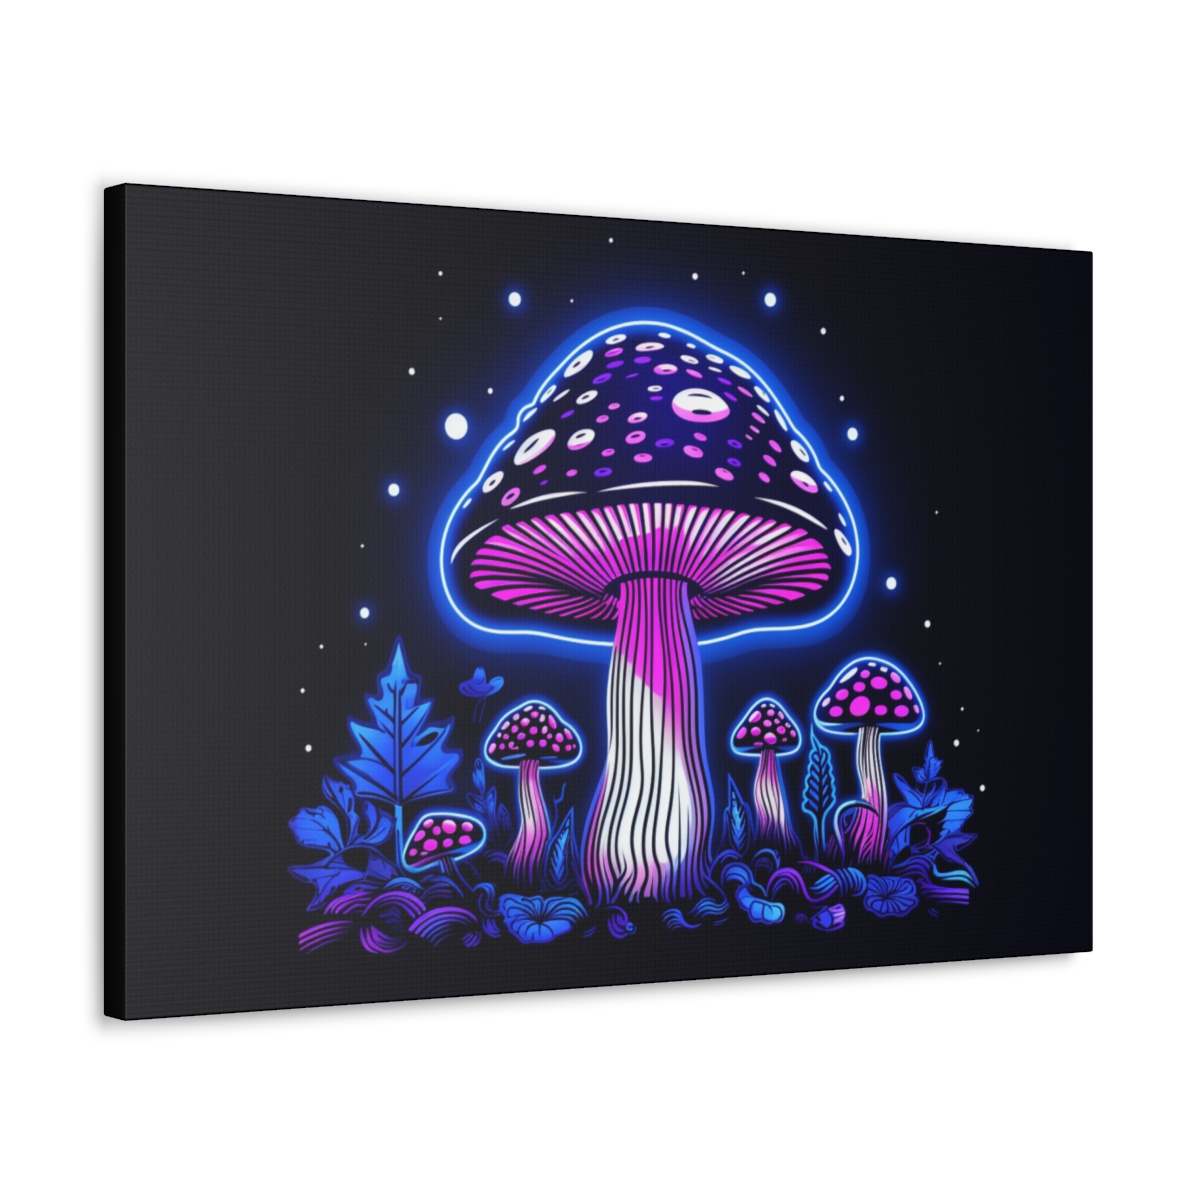 Trippy Mushroom Art: Evolve